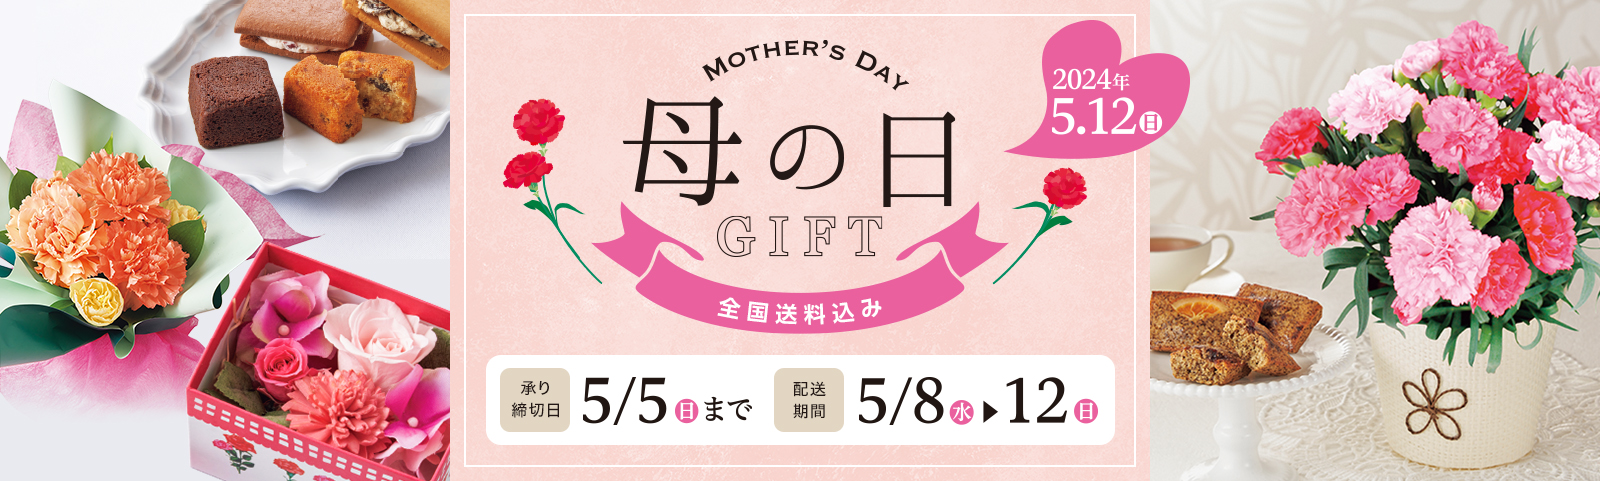 Mother's Day 2024/5/12(日) 母の日ギフト 承り締切日5月5日（日）まで 配送期間5月8日（水）から5月12日（日）まで 全国送料込み